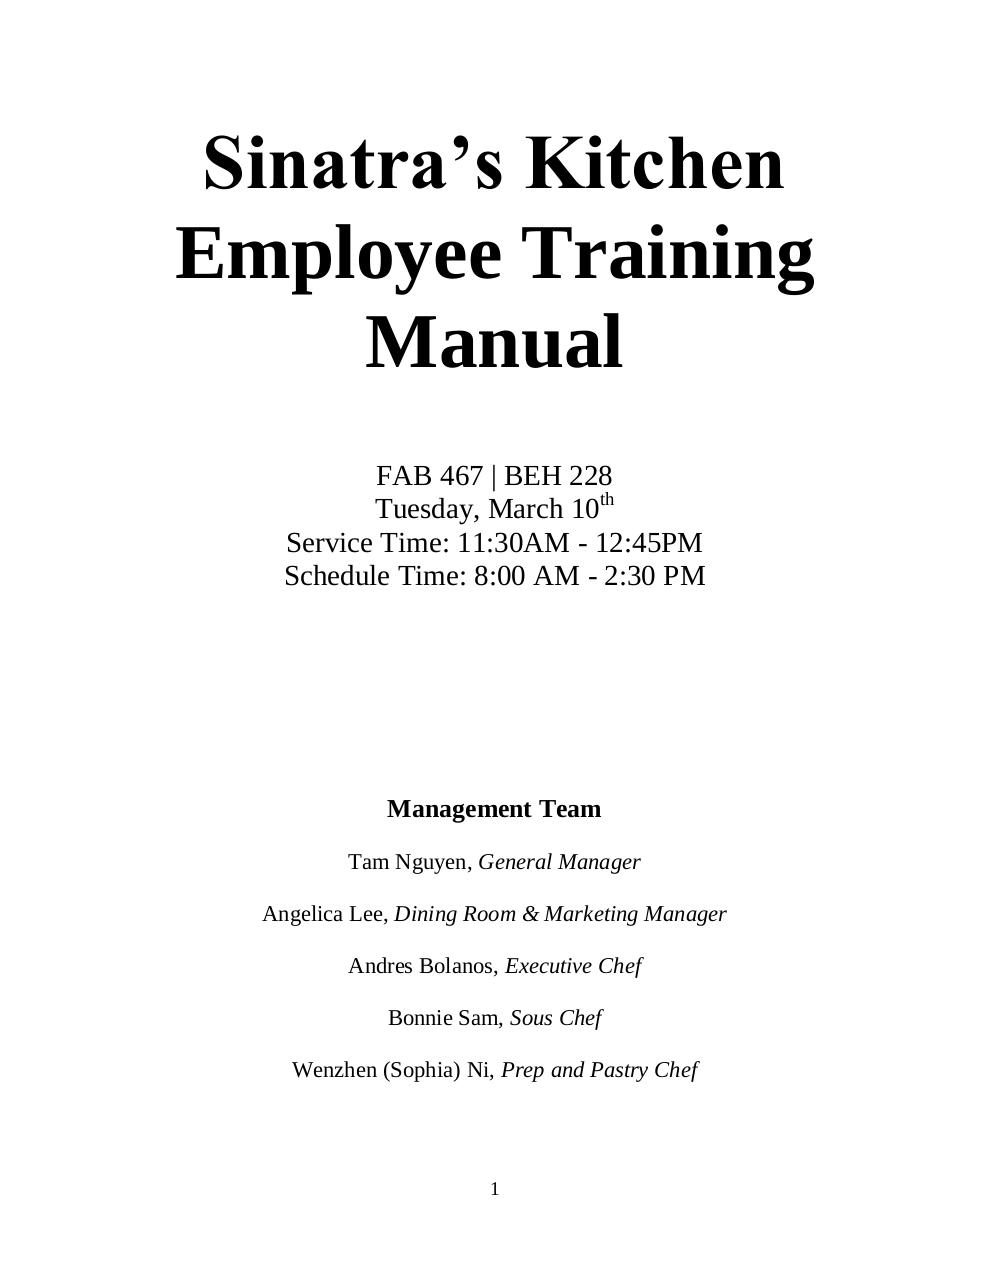 epicor 10 training manual pdf